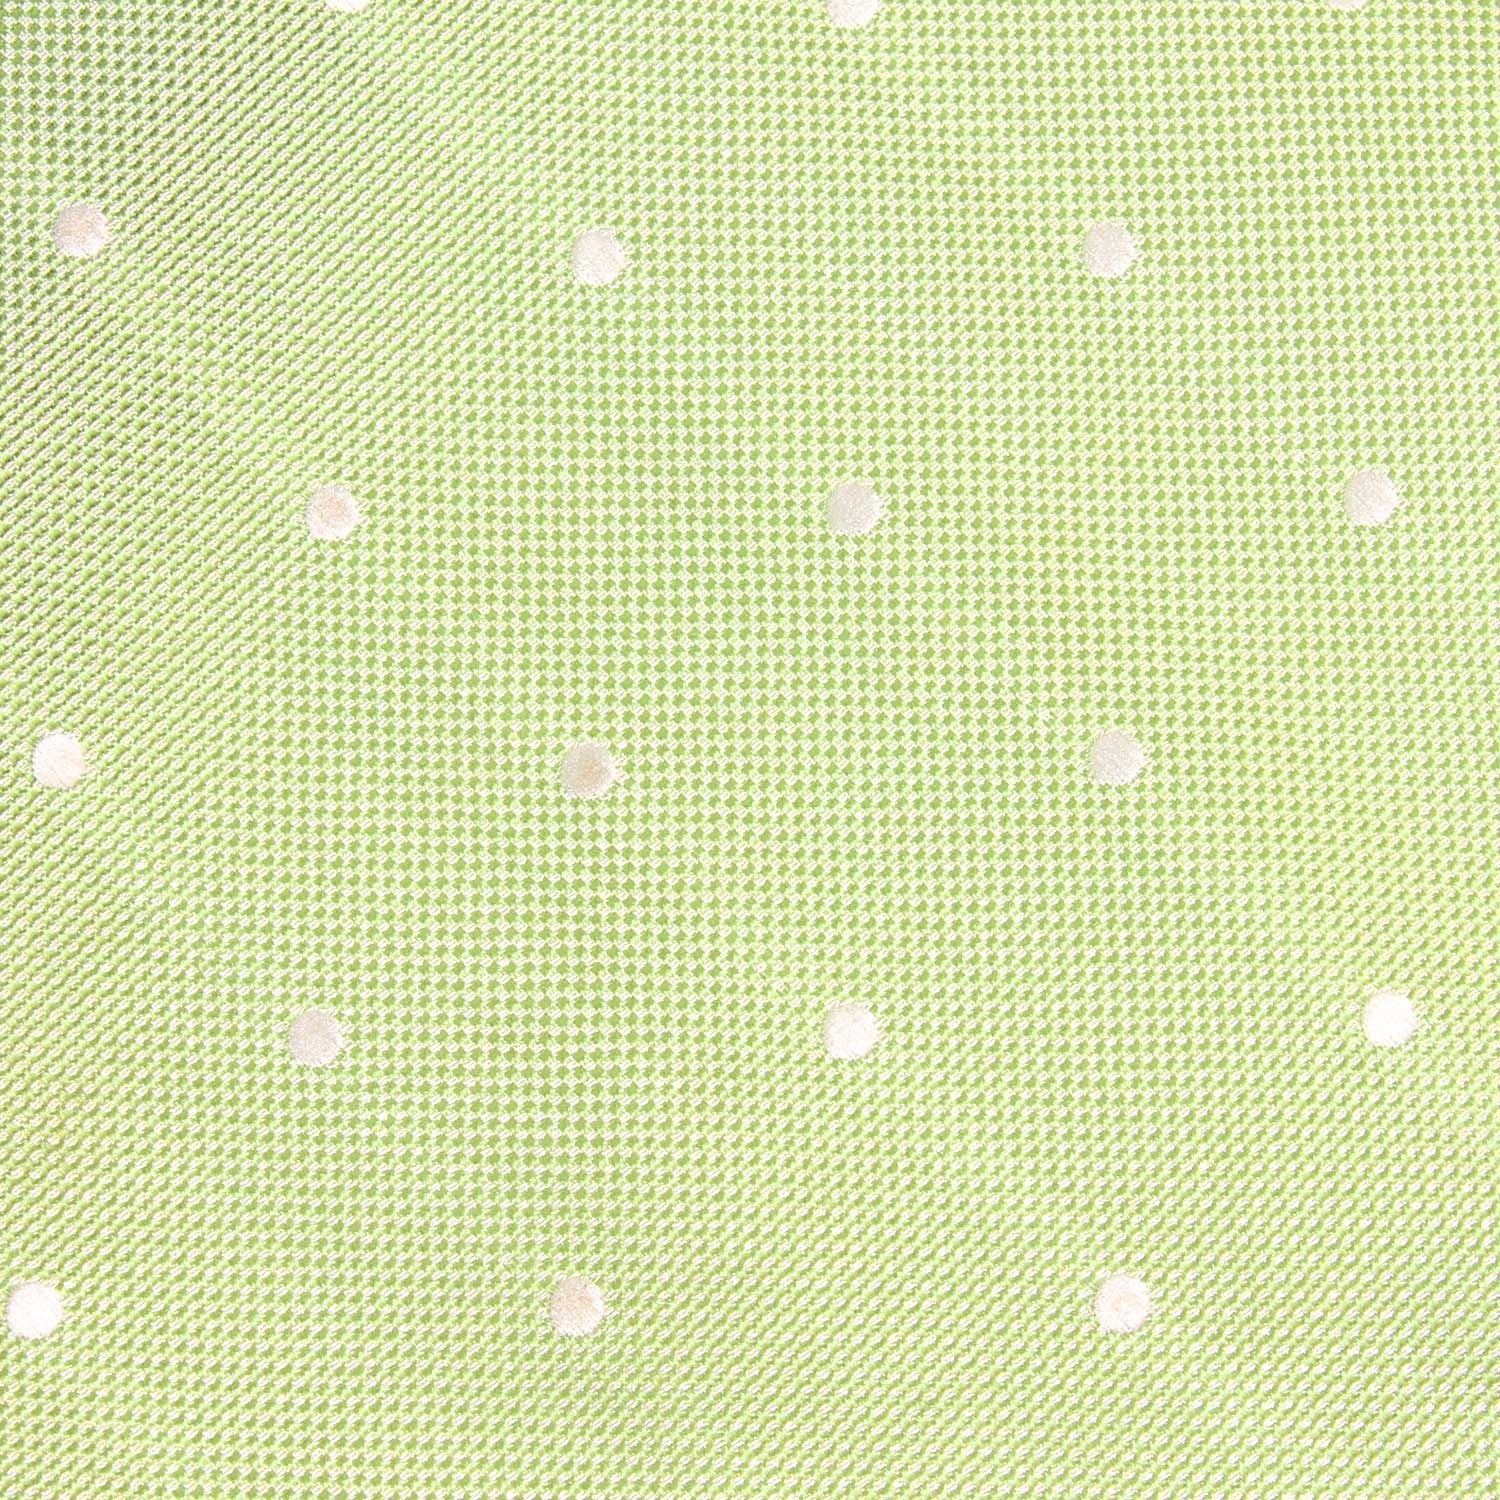 Light Mint Pistachio Green with White Polka Dots Fabric Skinny Tie X239